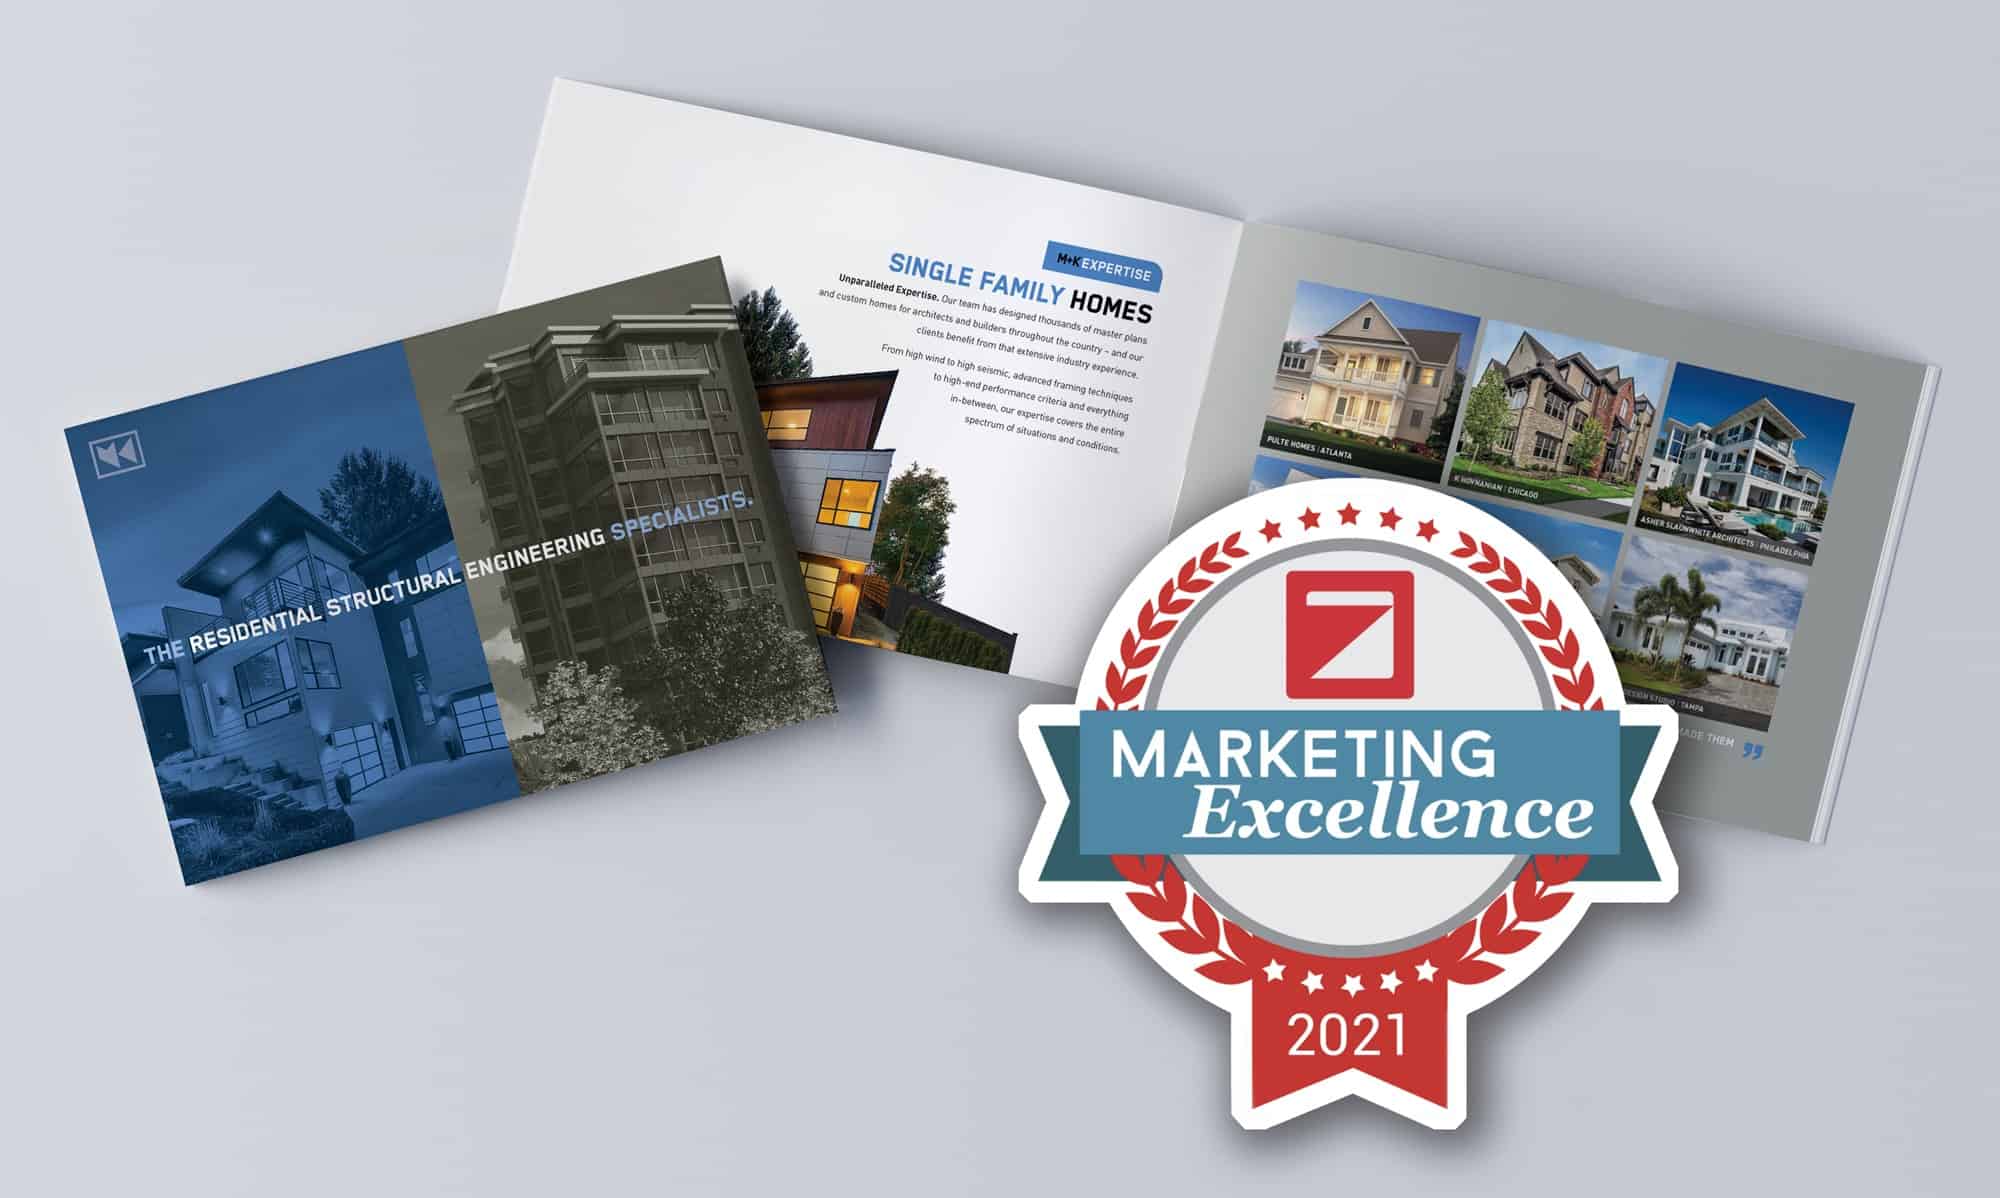 Zweig Marketing Excellence Award